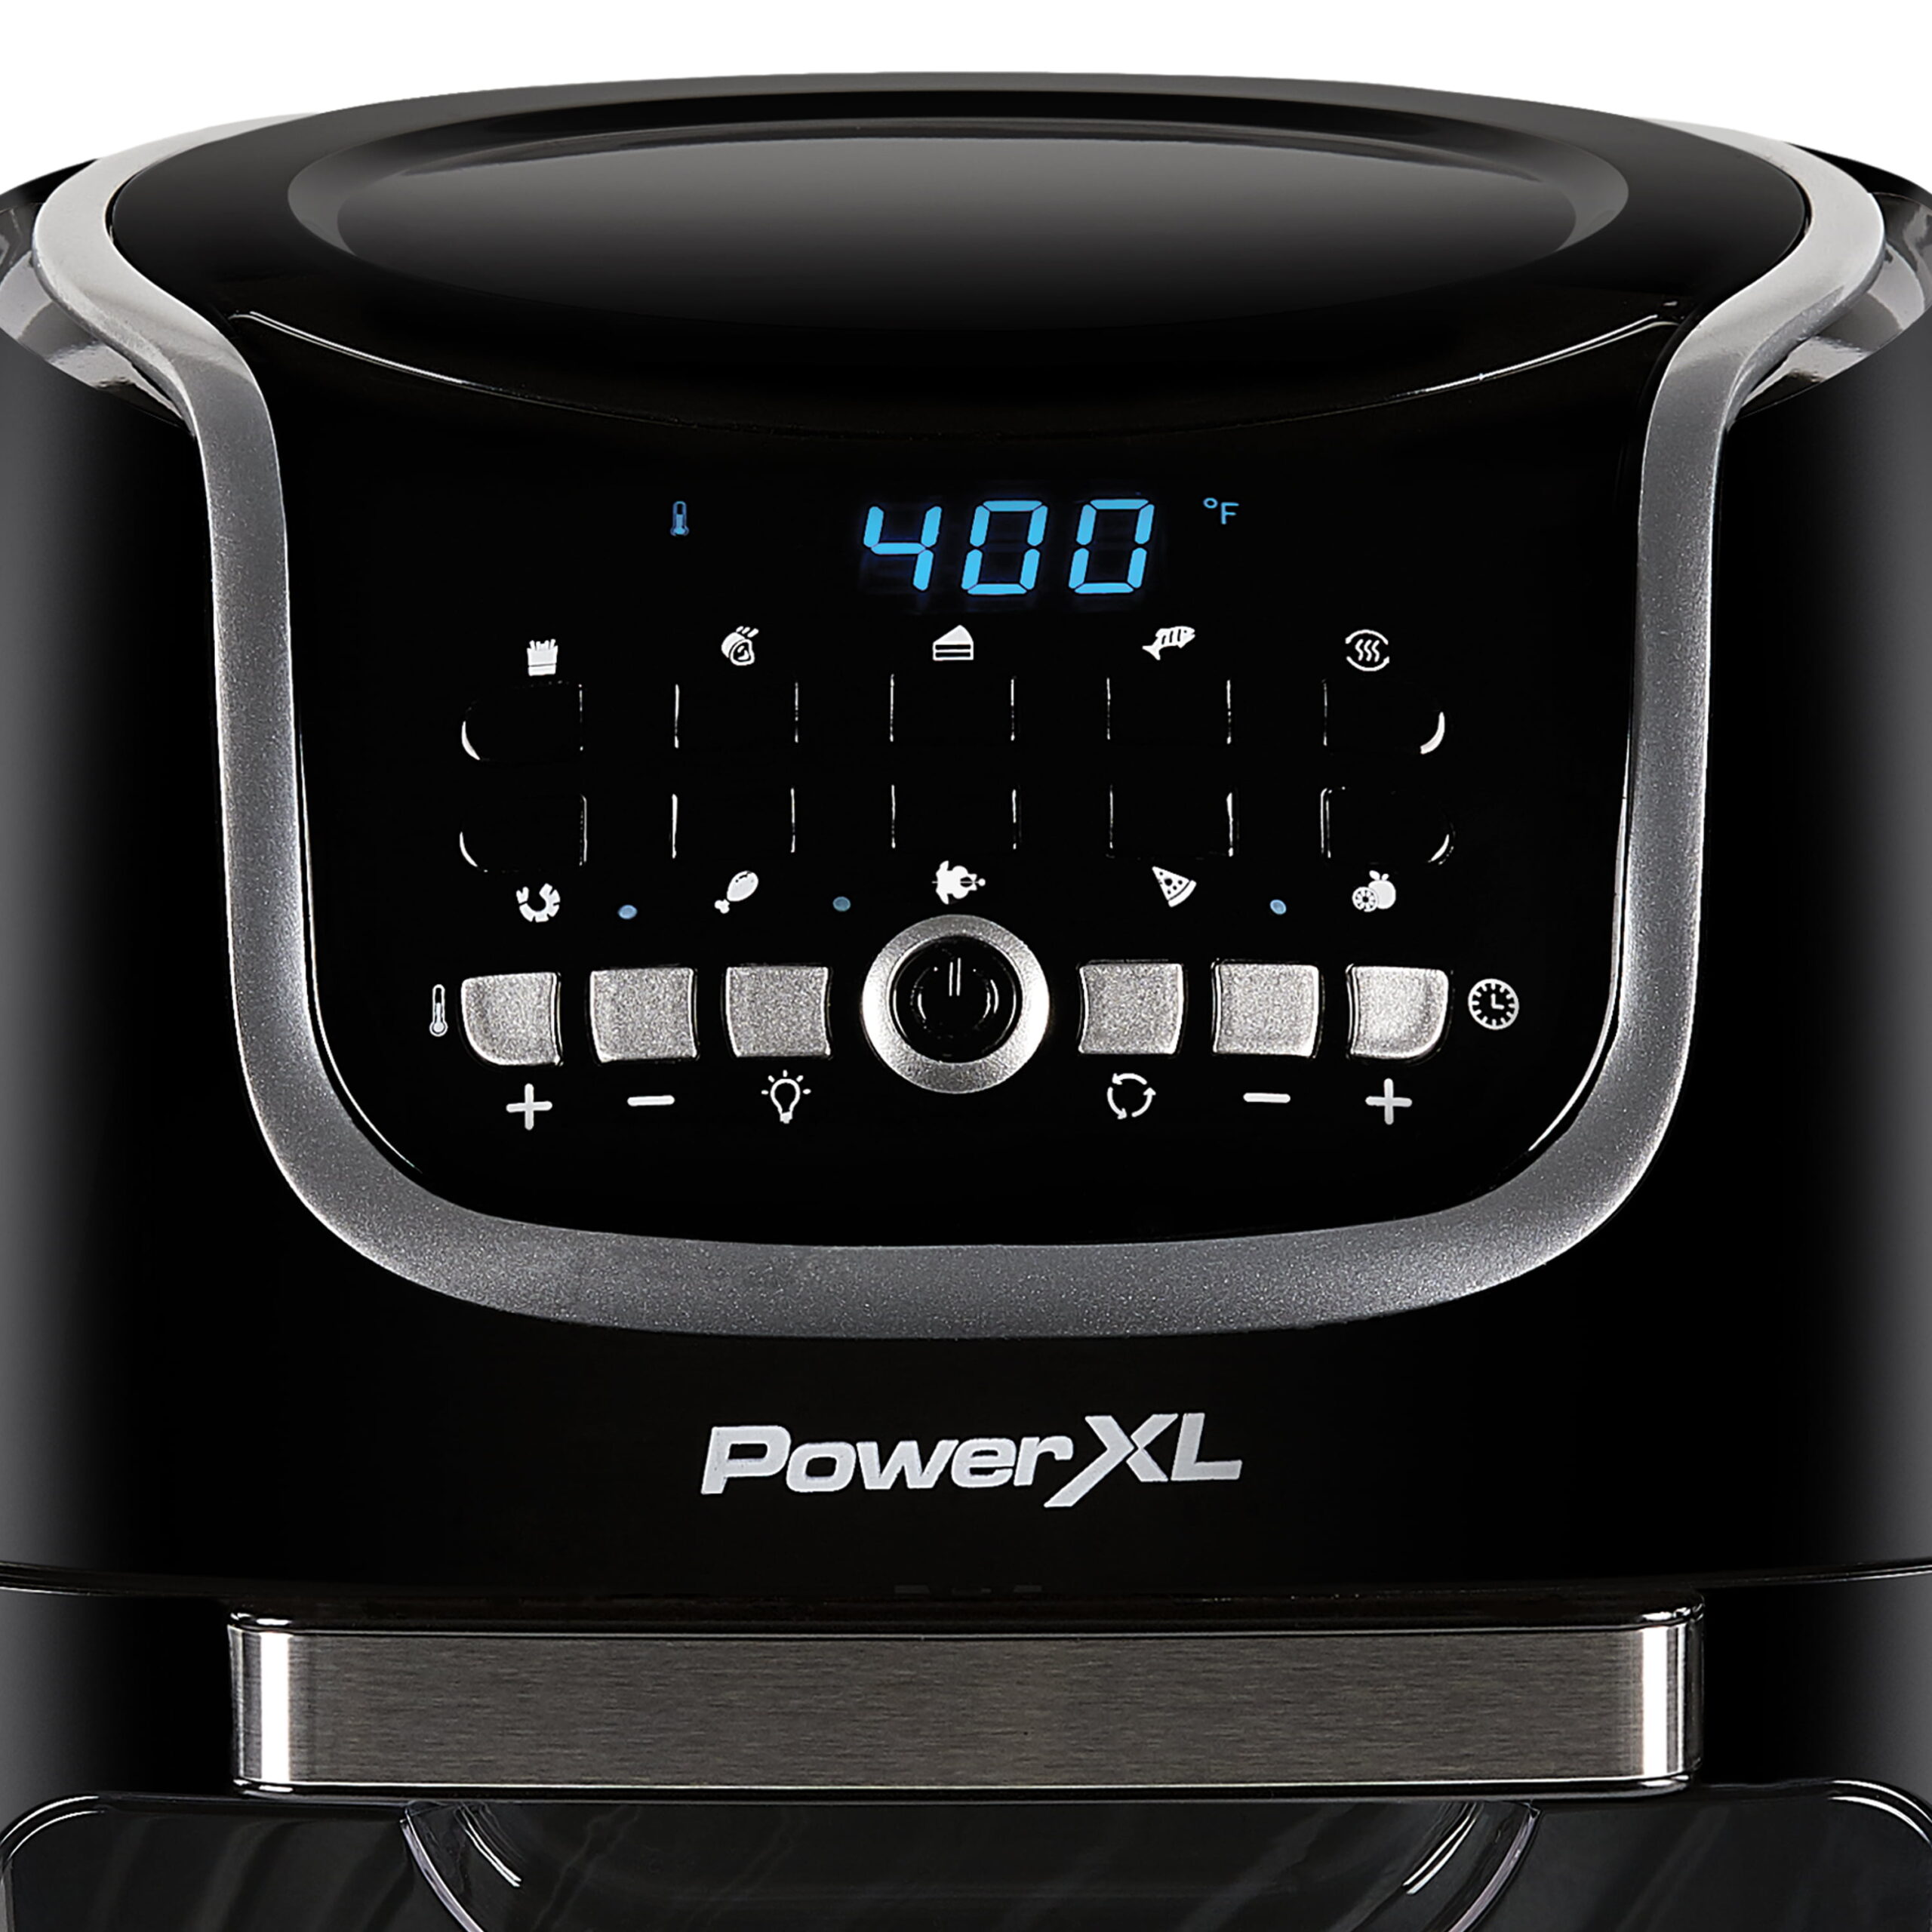 Buy PowerXL Vortex Pro Rapid Air Fryer 6 Qt., Black